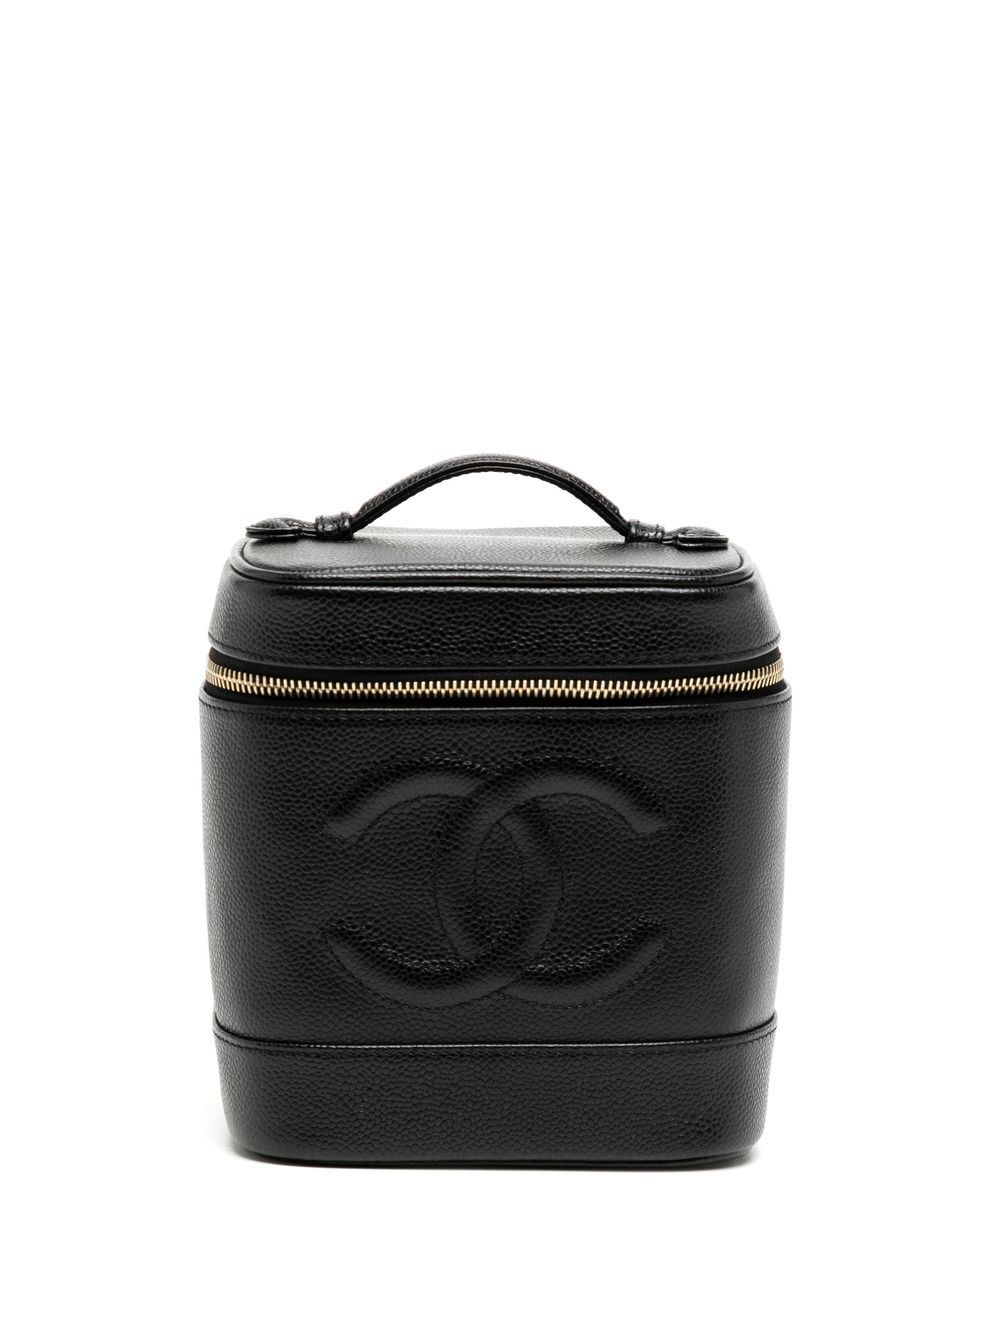 Chanel Pre-Owned 2006 CC stitch vanity handbag